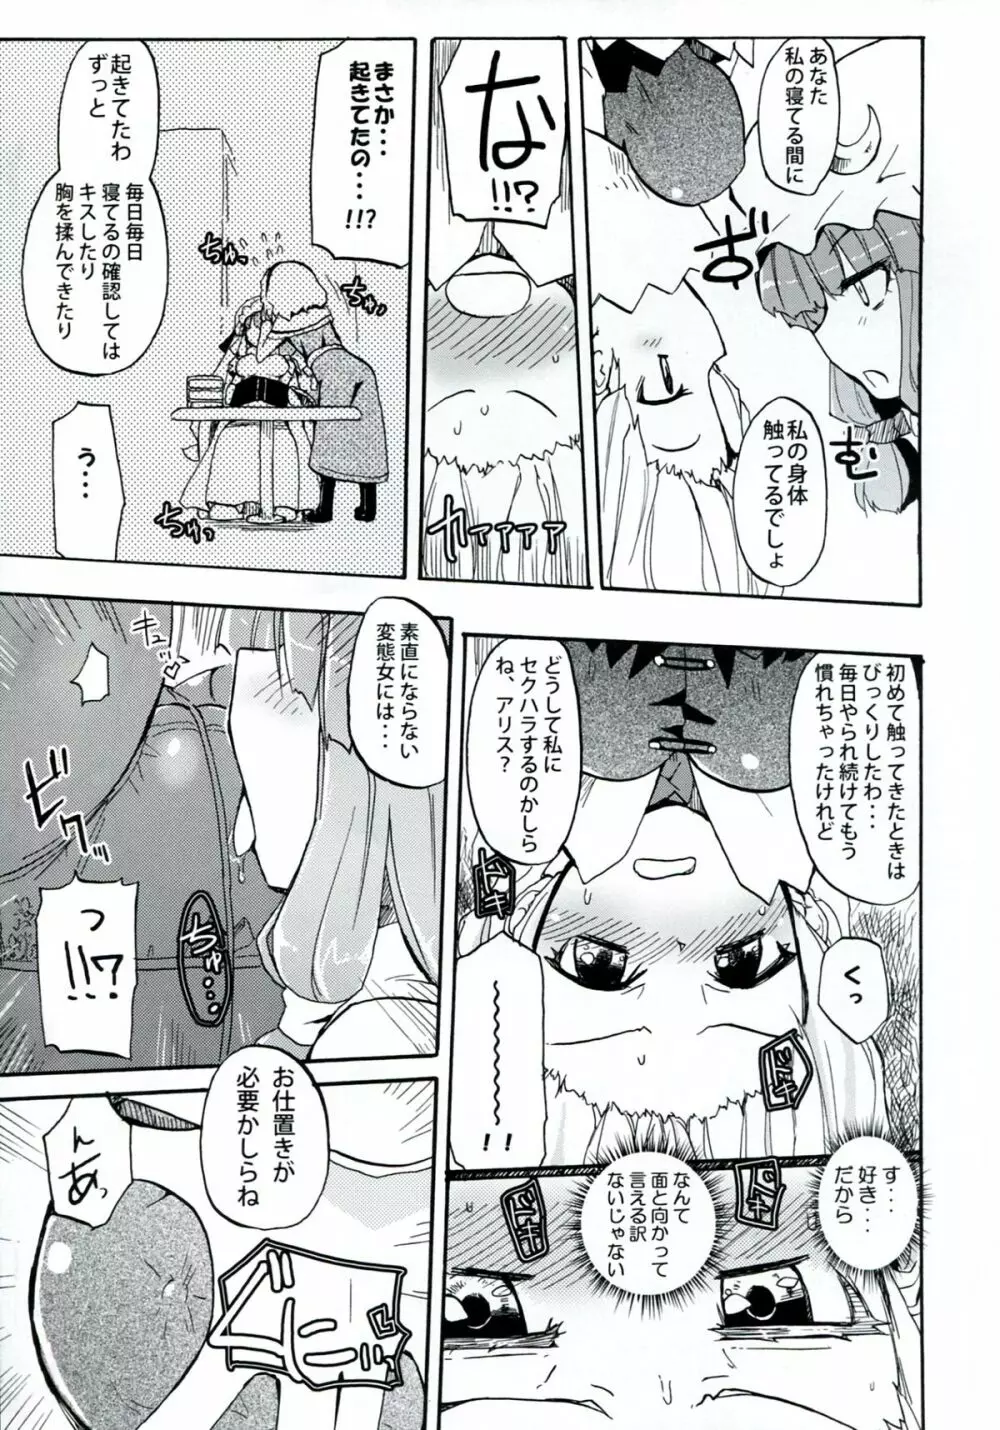 Homuraya Milk ★ Collection 2 13ページ